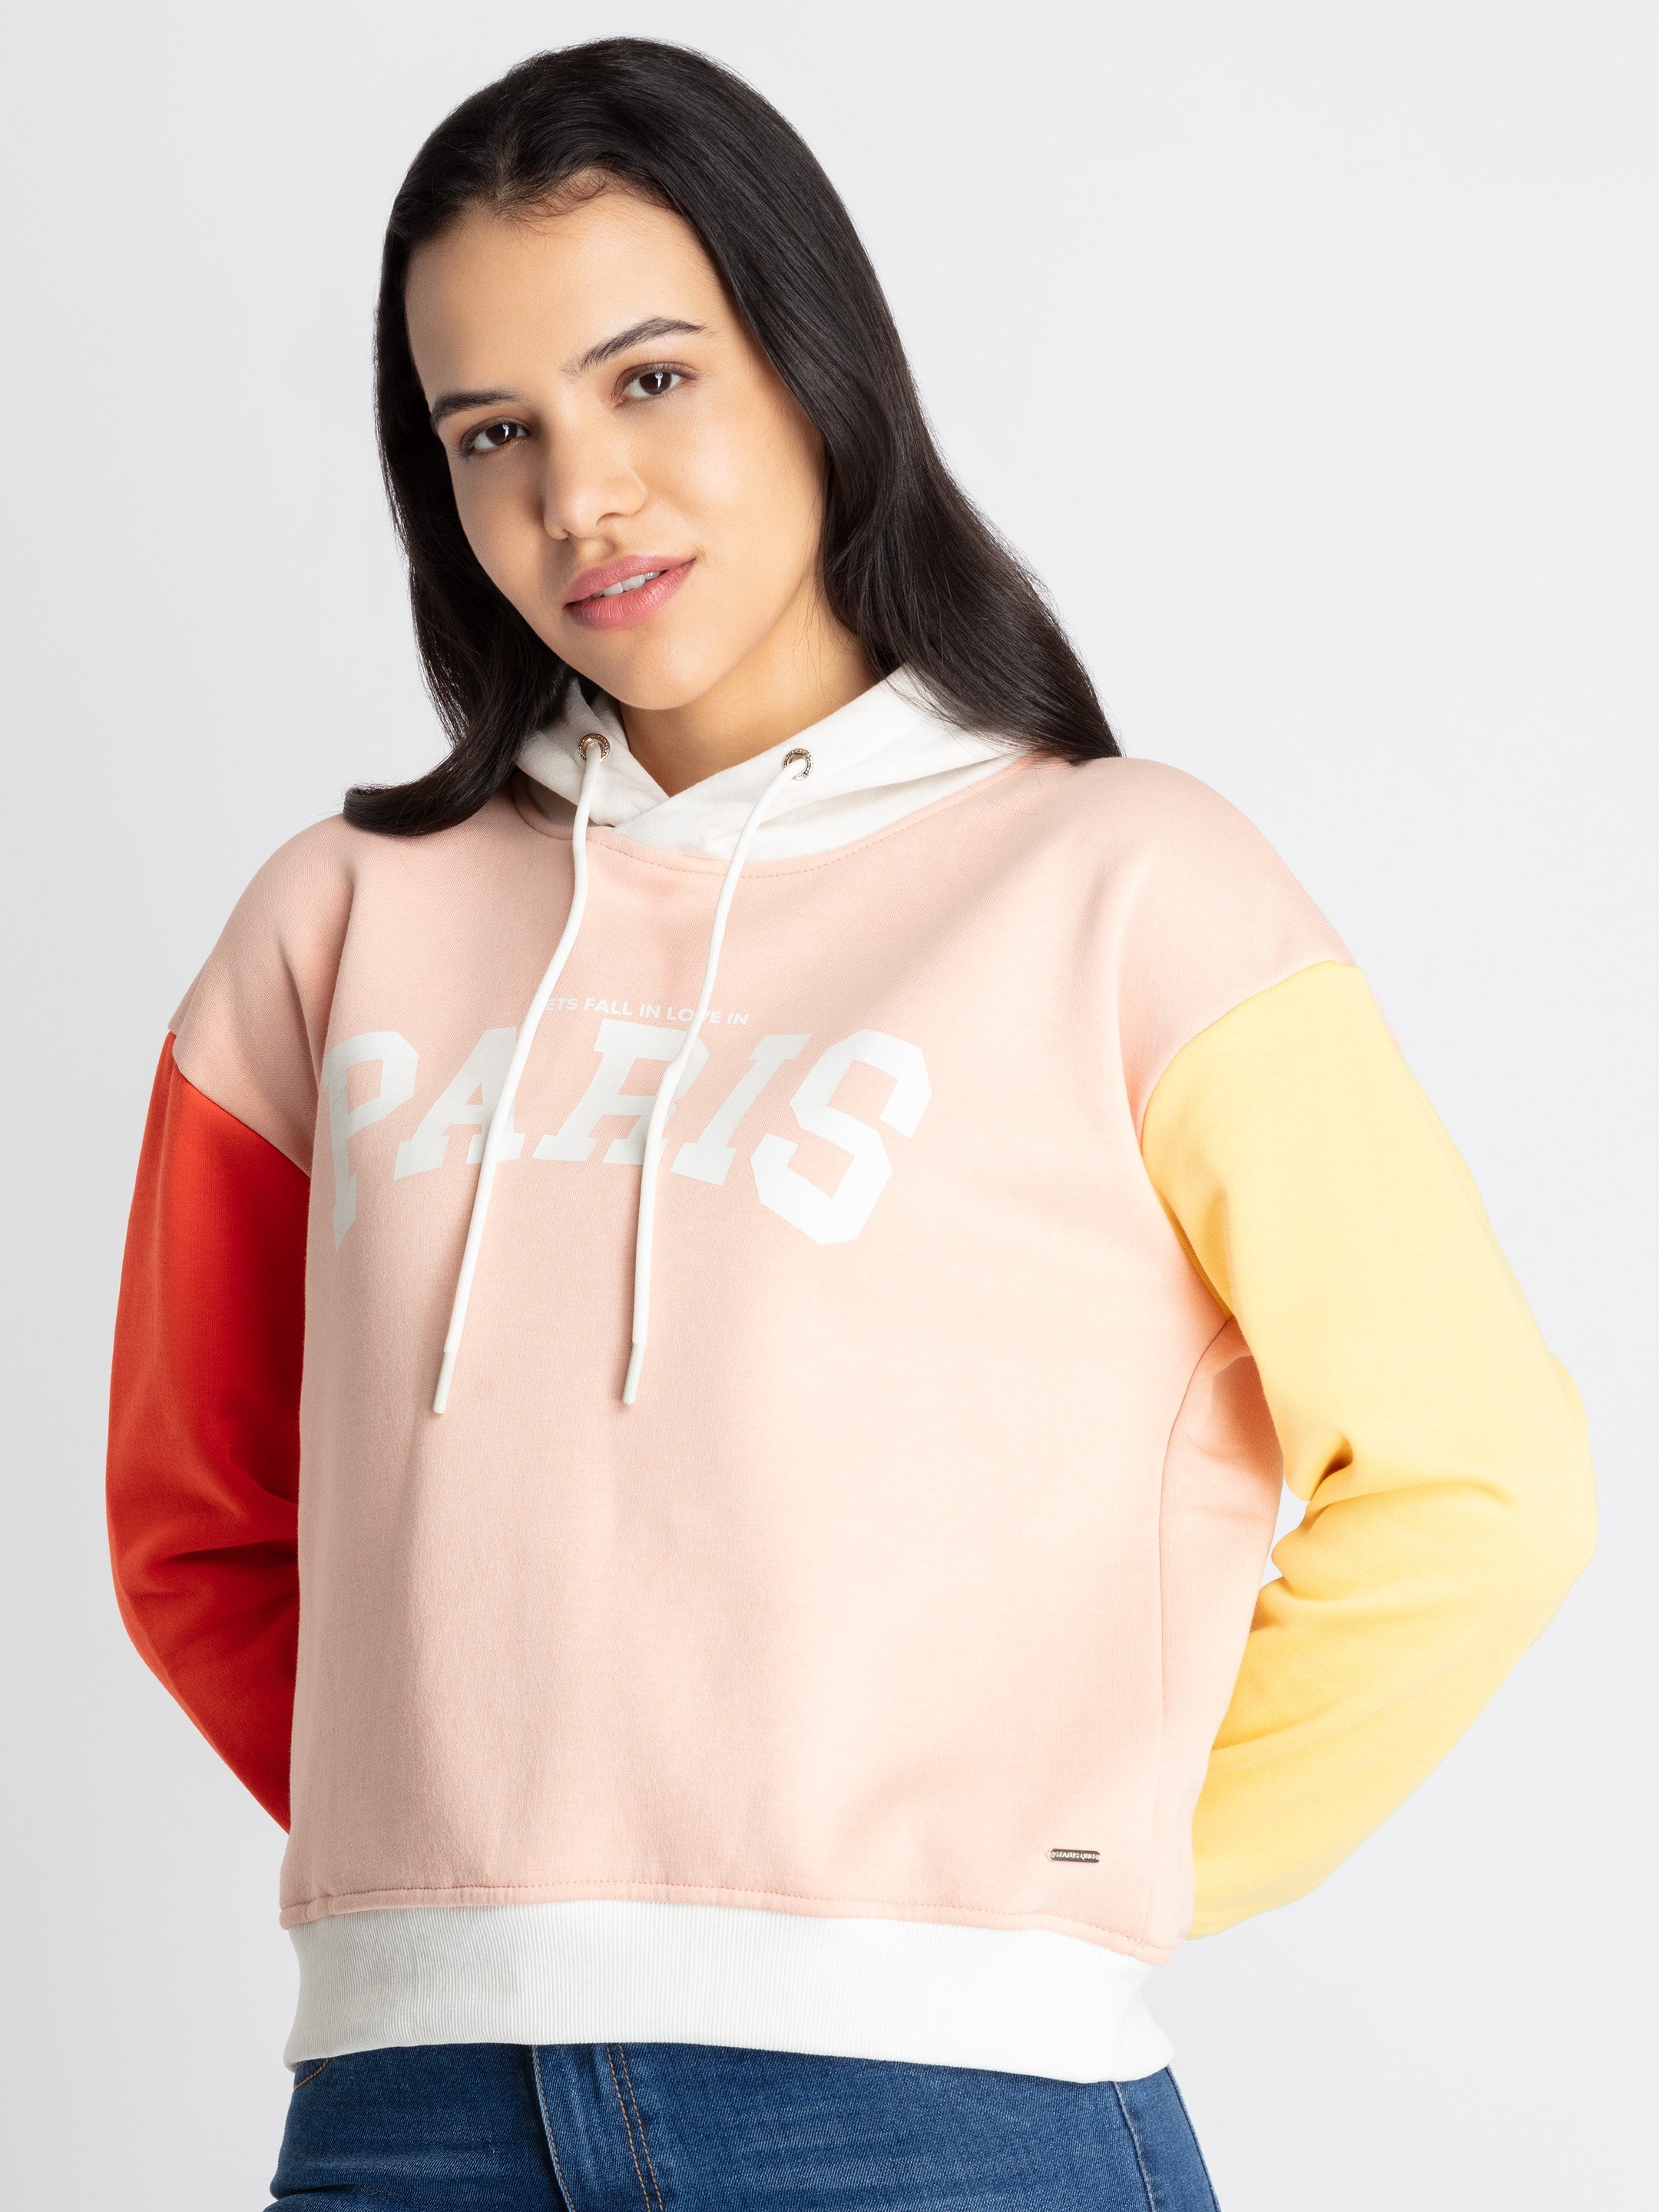 hoodie sweatshirt for women